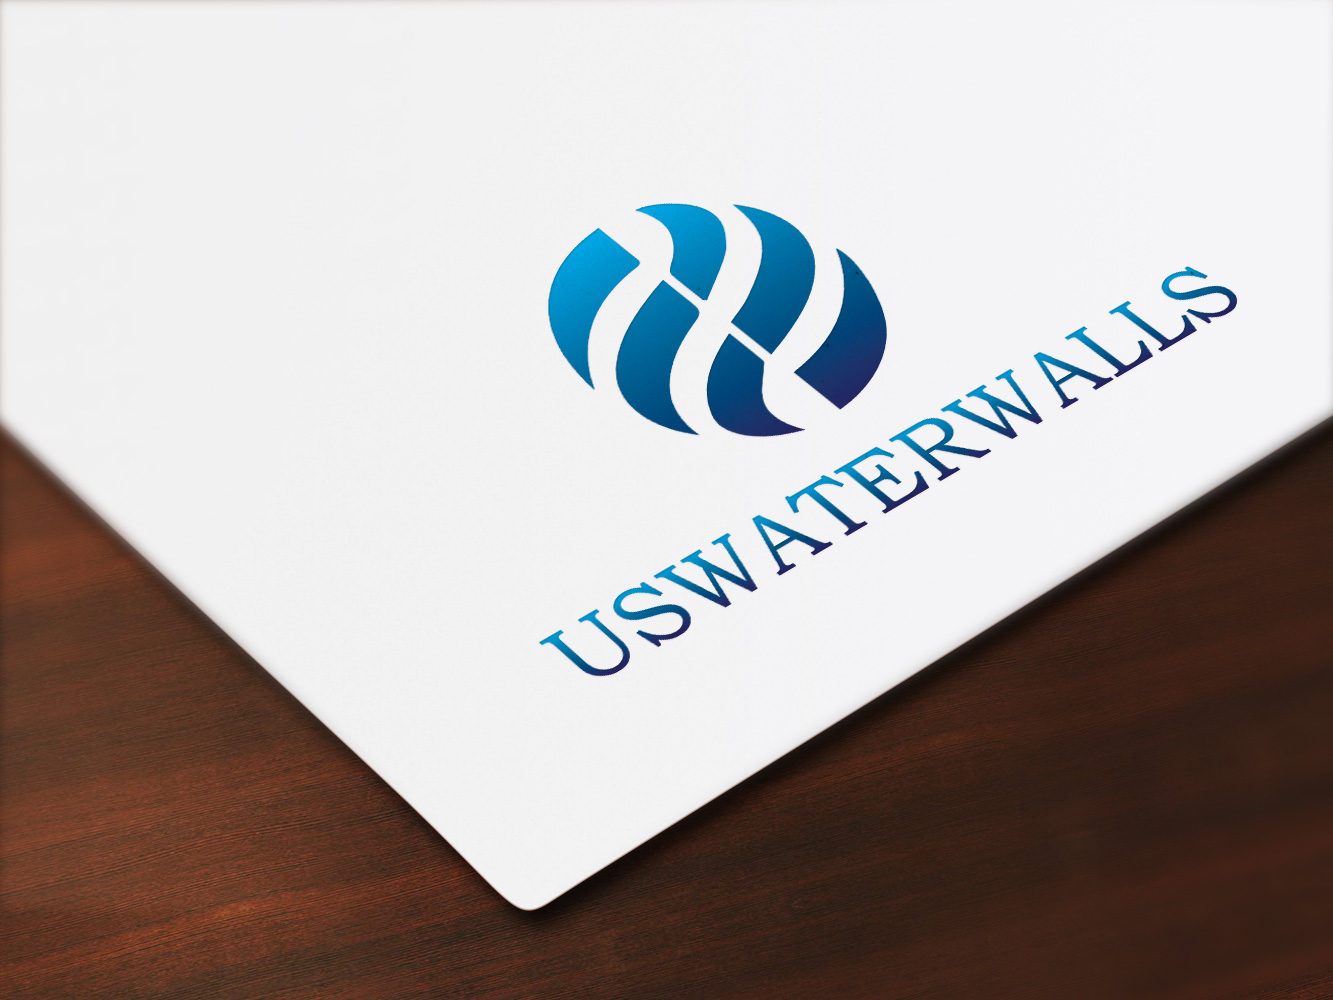 USWATERWALLS, LLC